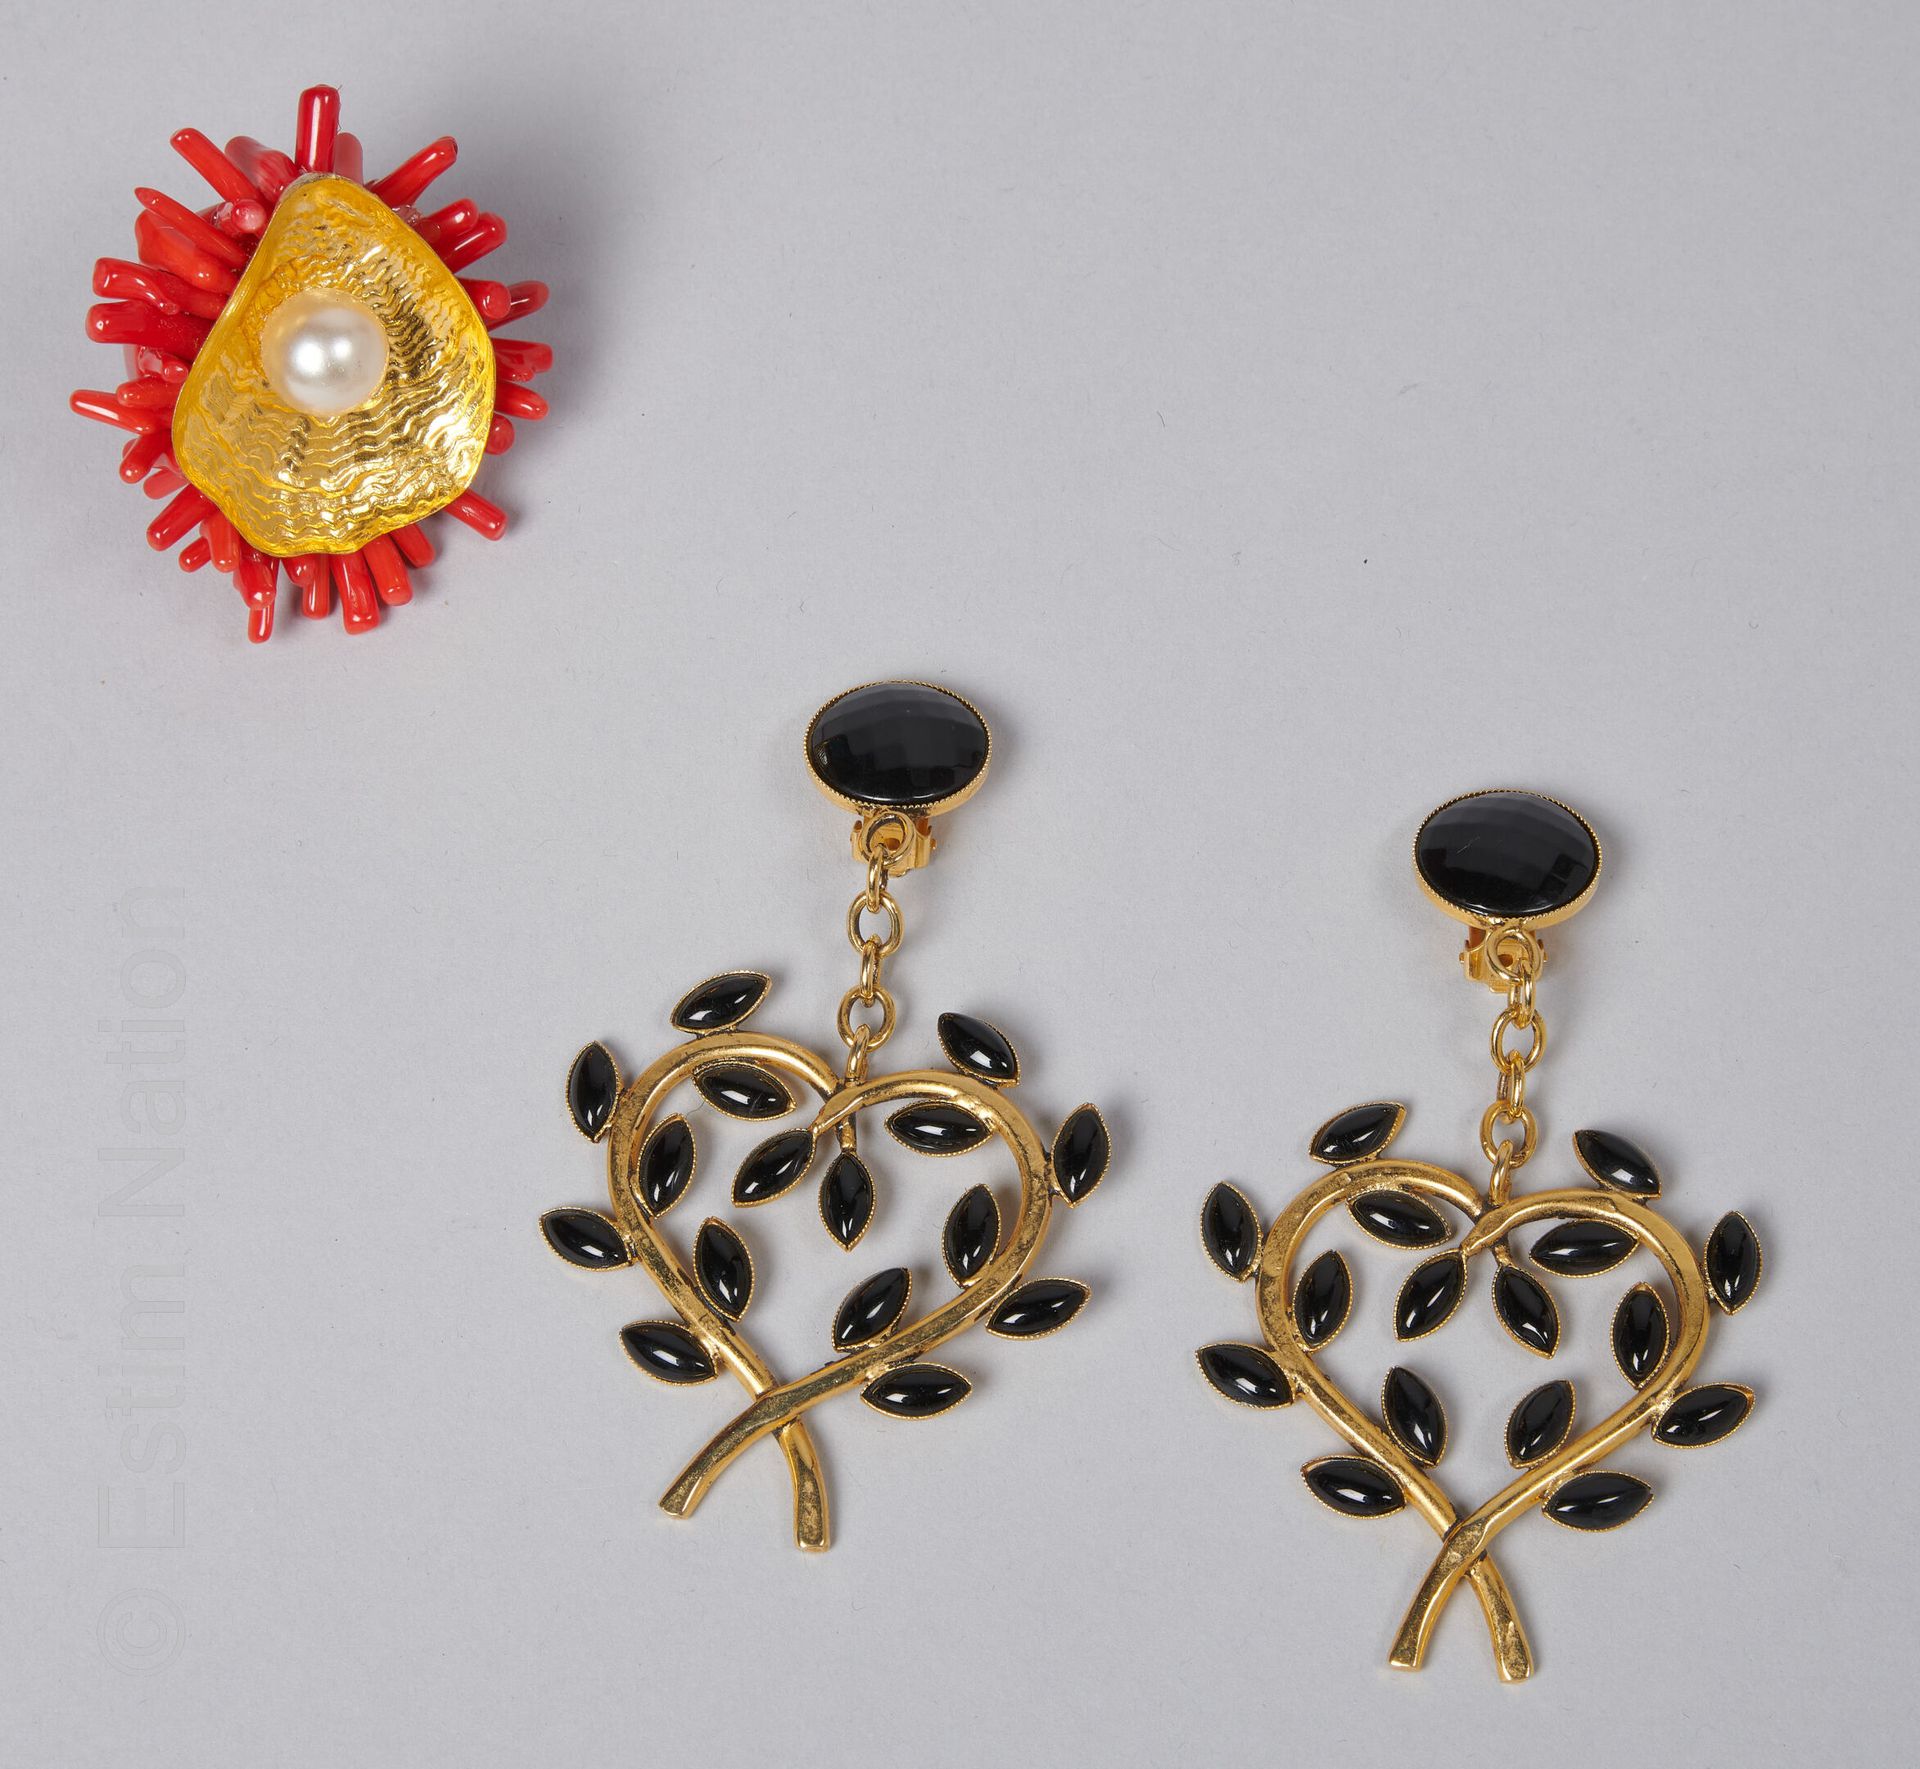 ANONYME 一对镀金金属和黑色树脂的夹子耳环，红色珊瑚状树脂的戒指，上面点缀着一个贝壳和一颗梦幻般的珍珠（不保证状态）。